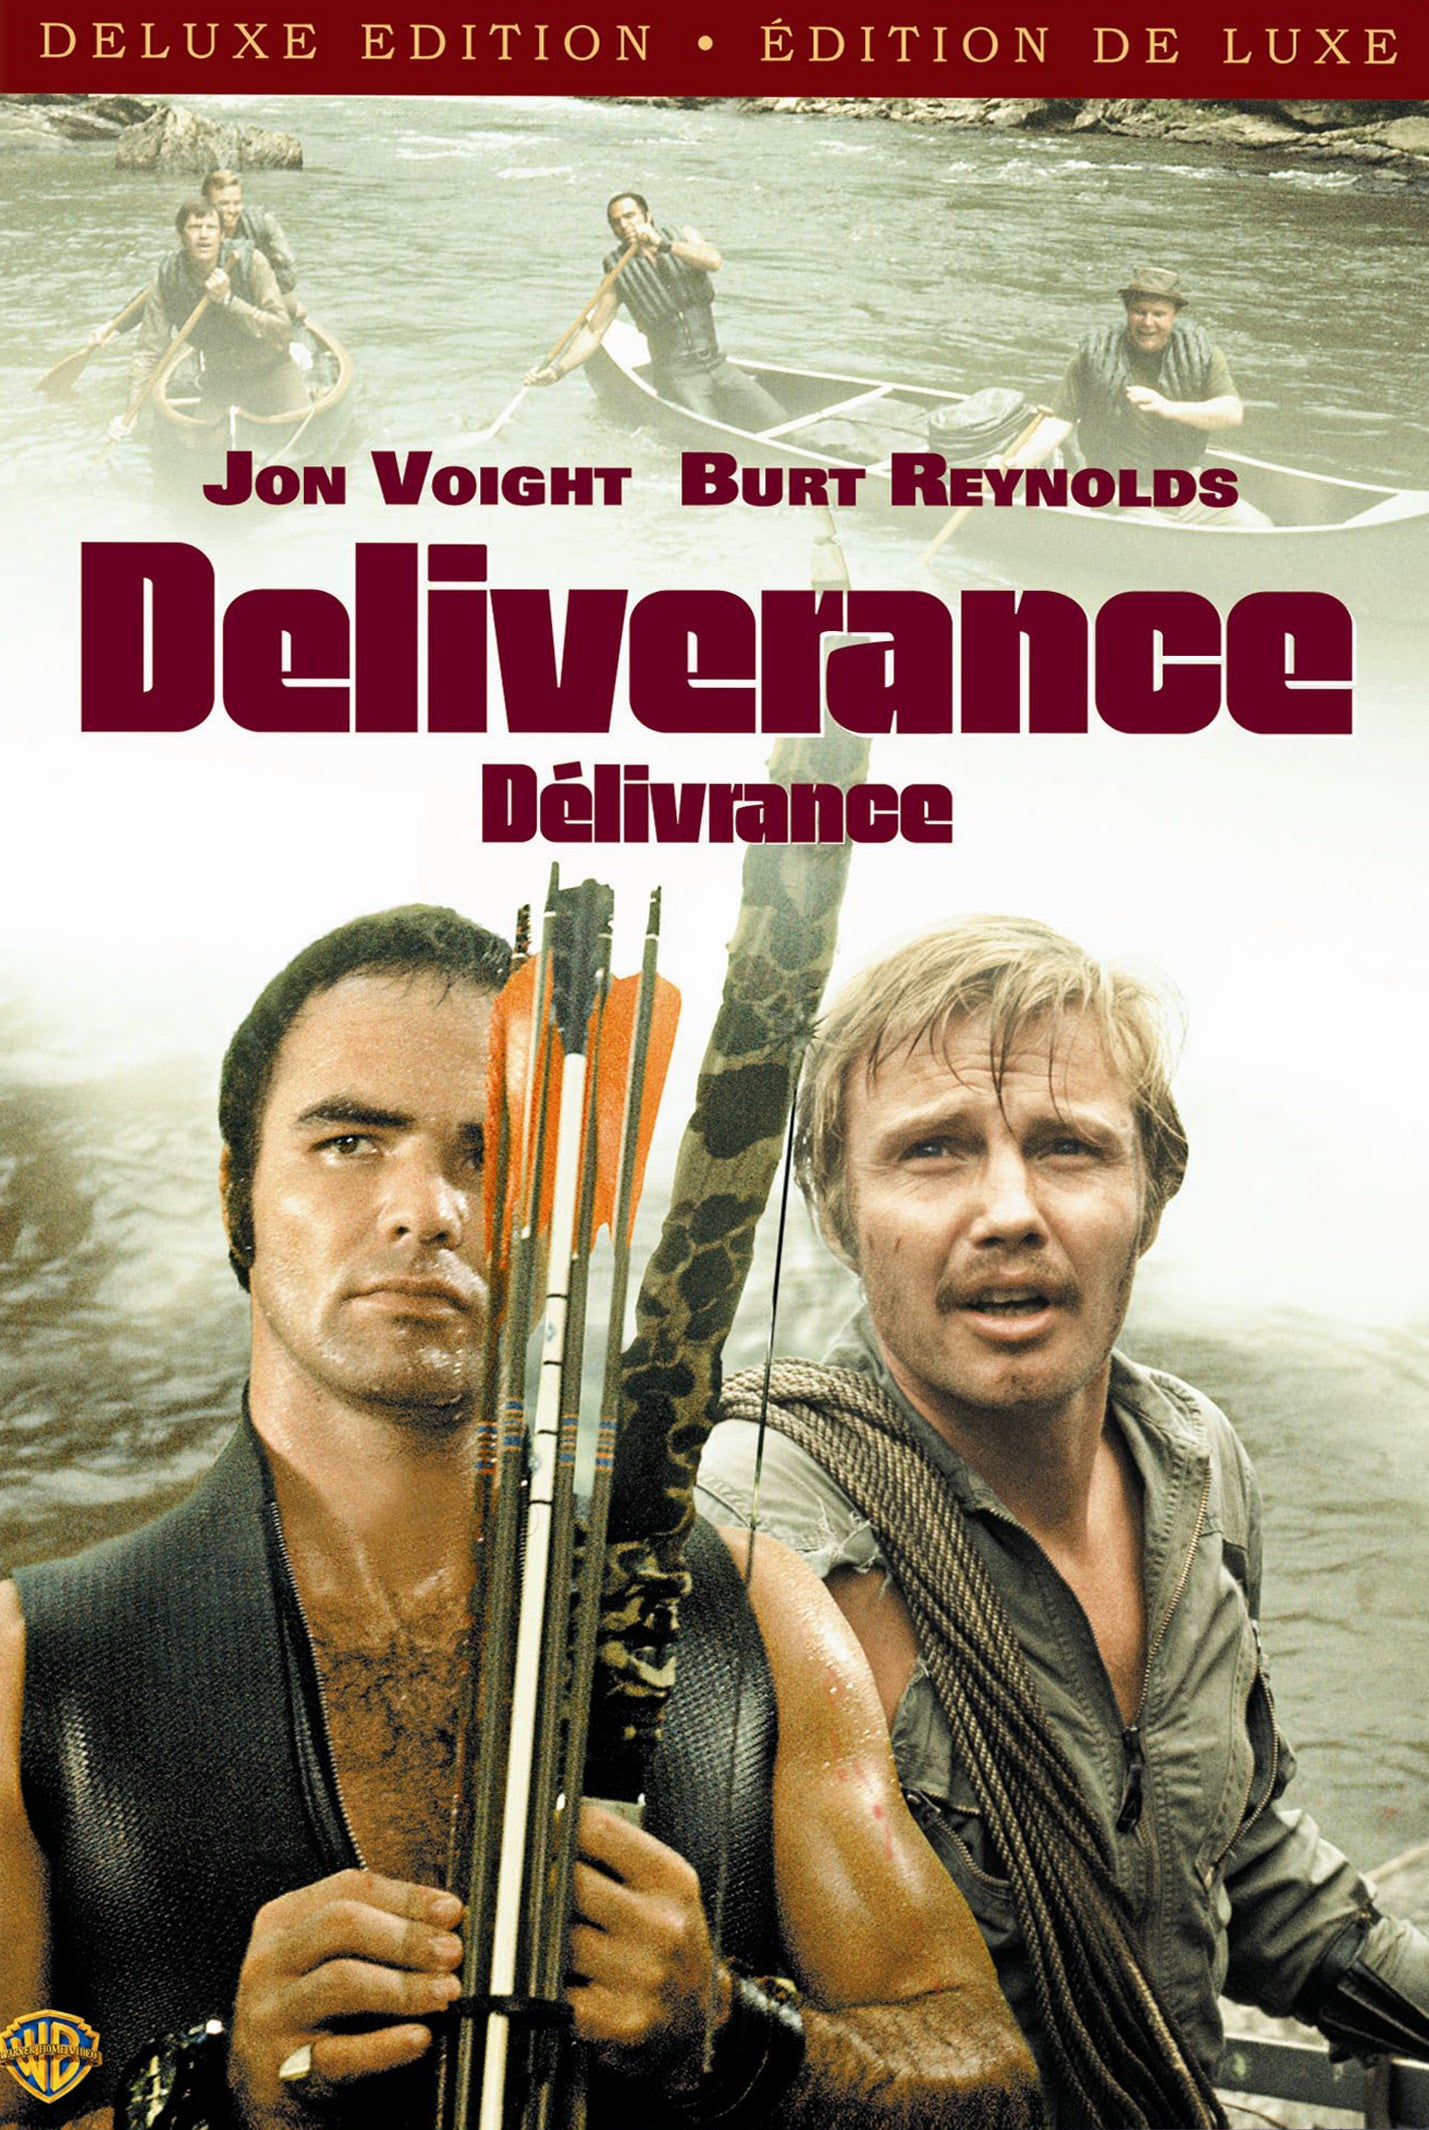 Deliverance [Special Edition] cover art